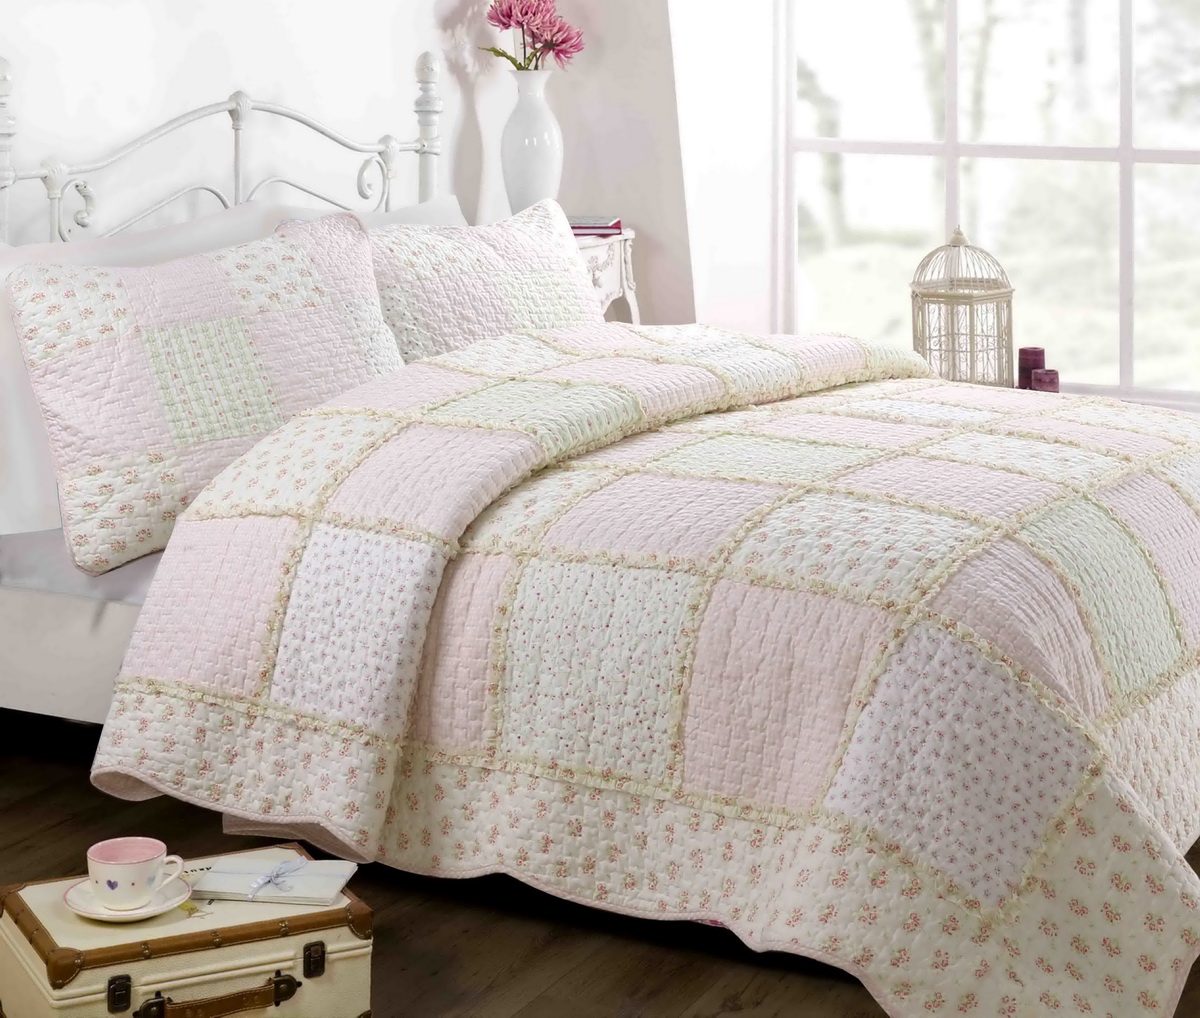 GEORGE & JIMMY Fairtable Bedroom 100% Hypoallergenic cotton 3 piece Floral patchwork Quilt Set Bedroom Quilt Bedding Queen Size Pink